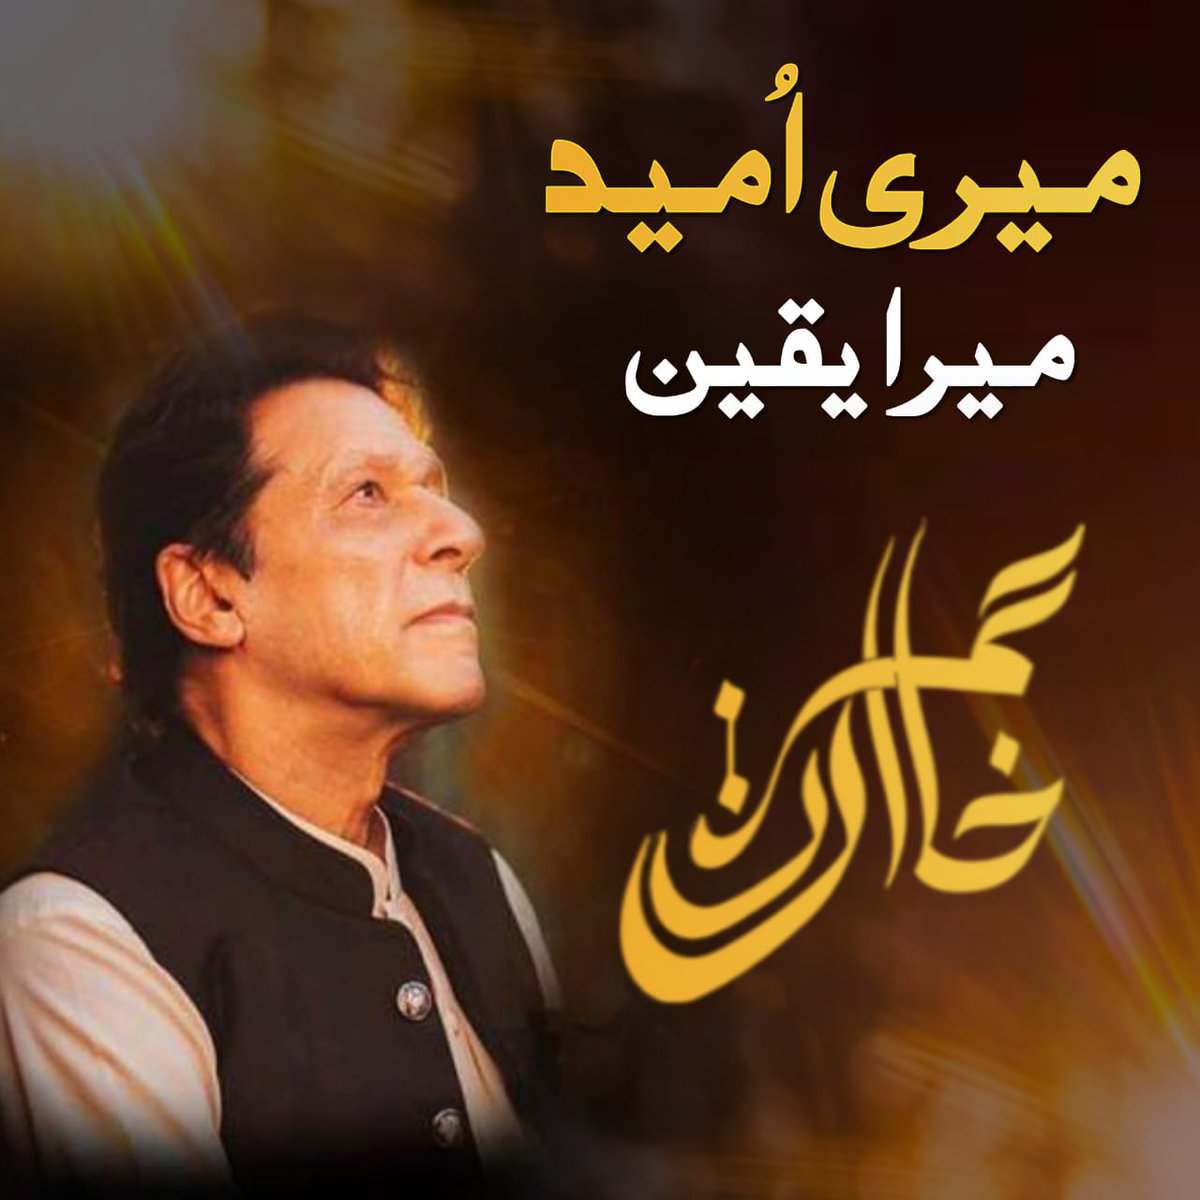 قوم کی امید قوم کا یقین عمران خان 
#نظام_بدلو_پاکستان_بدلو